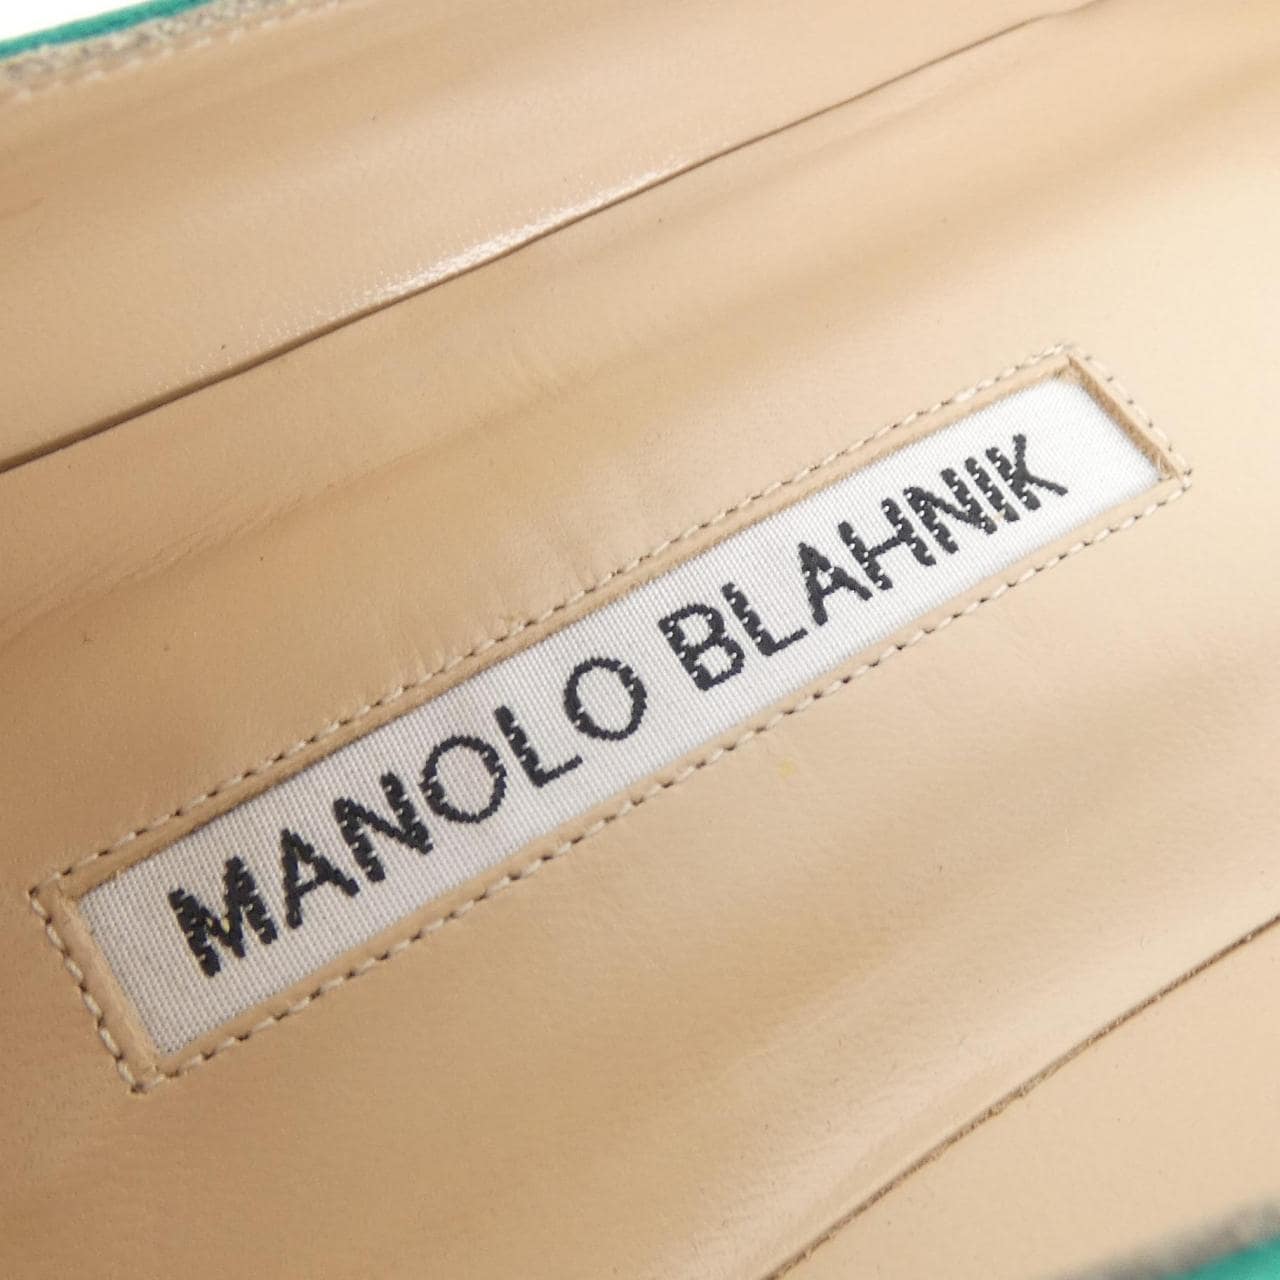 MANOLO BLAHNIK ·伯拉尼克 (manolo blahnik) 高跟鞋